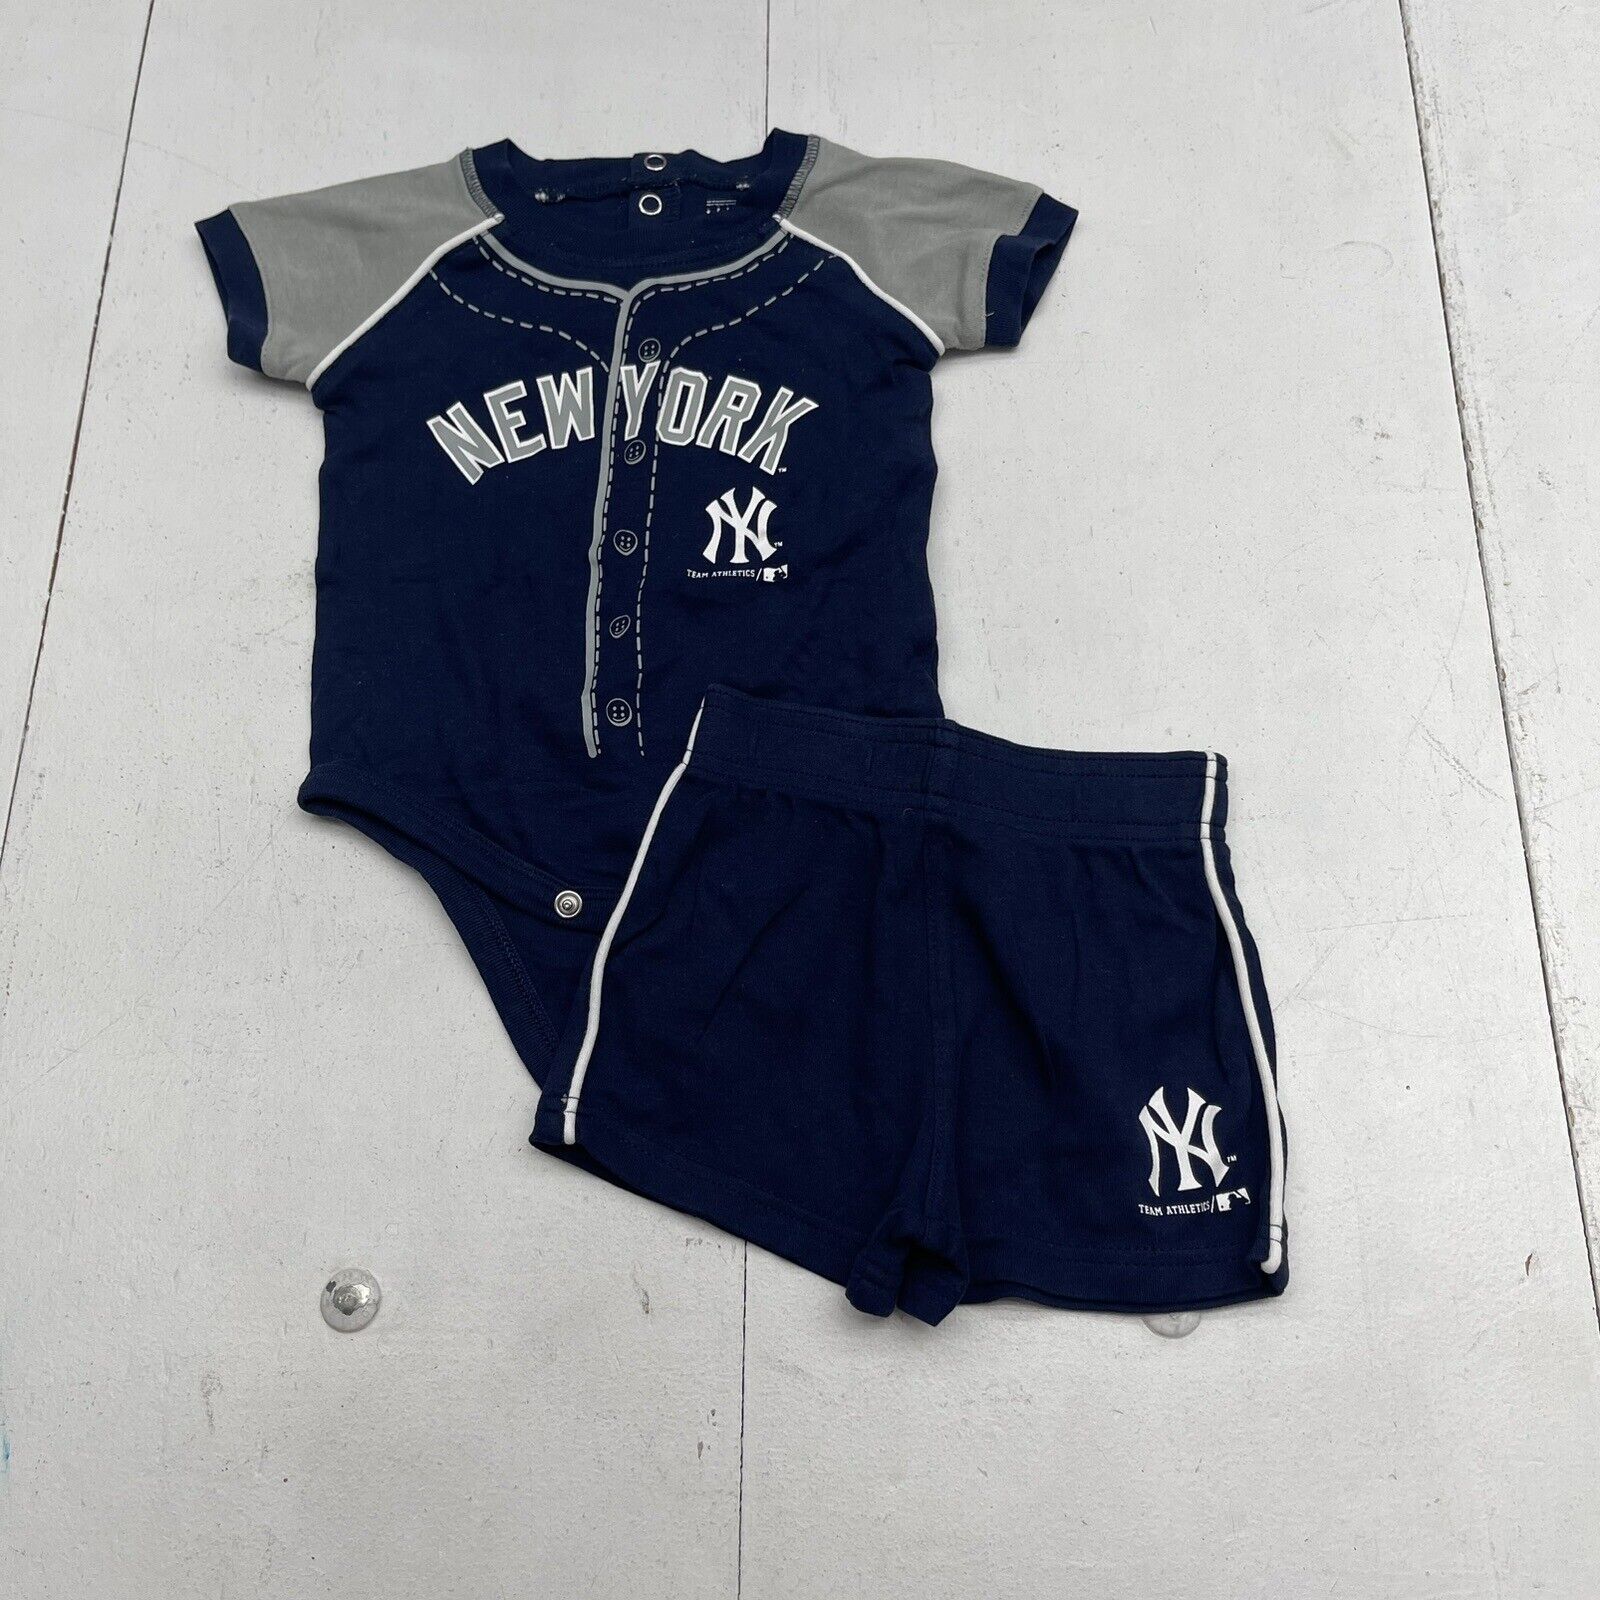 Male New York Yankees Jerseys in New York Yankees Team Shop